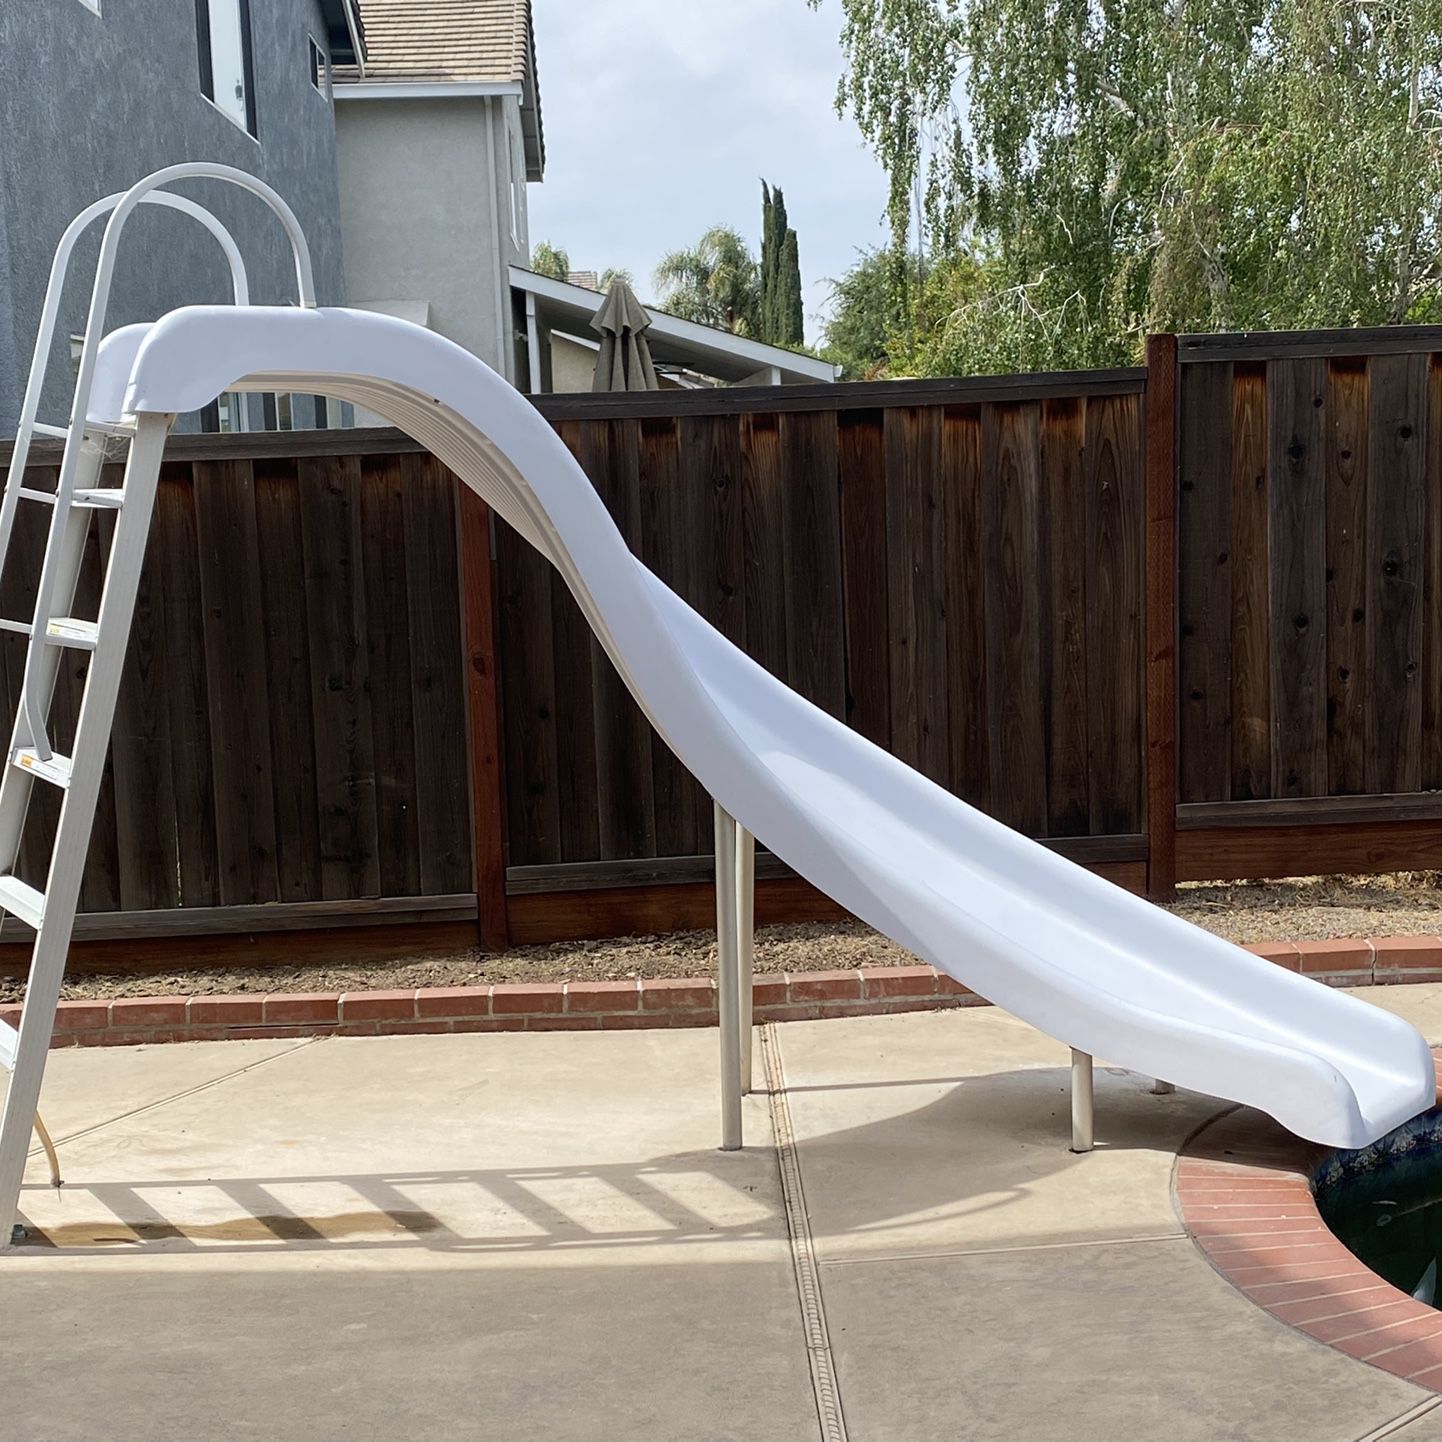 Pool Pillow Logo Mule Slides for Sale in Santa Clarita, CA - OfferUp